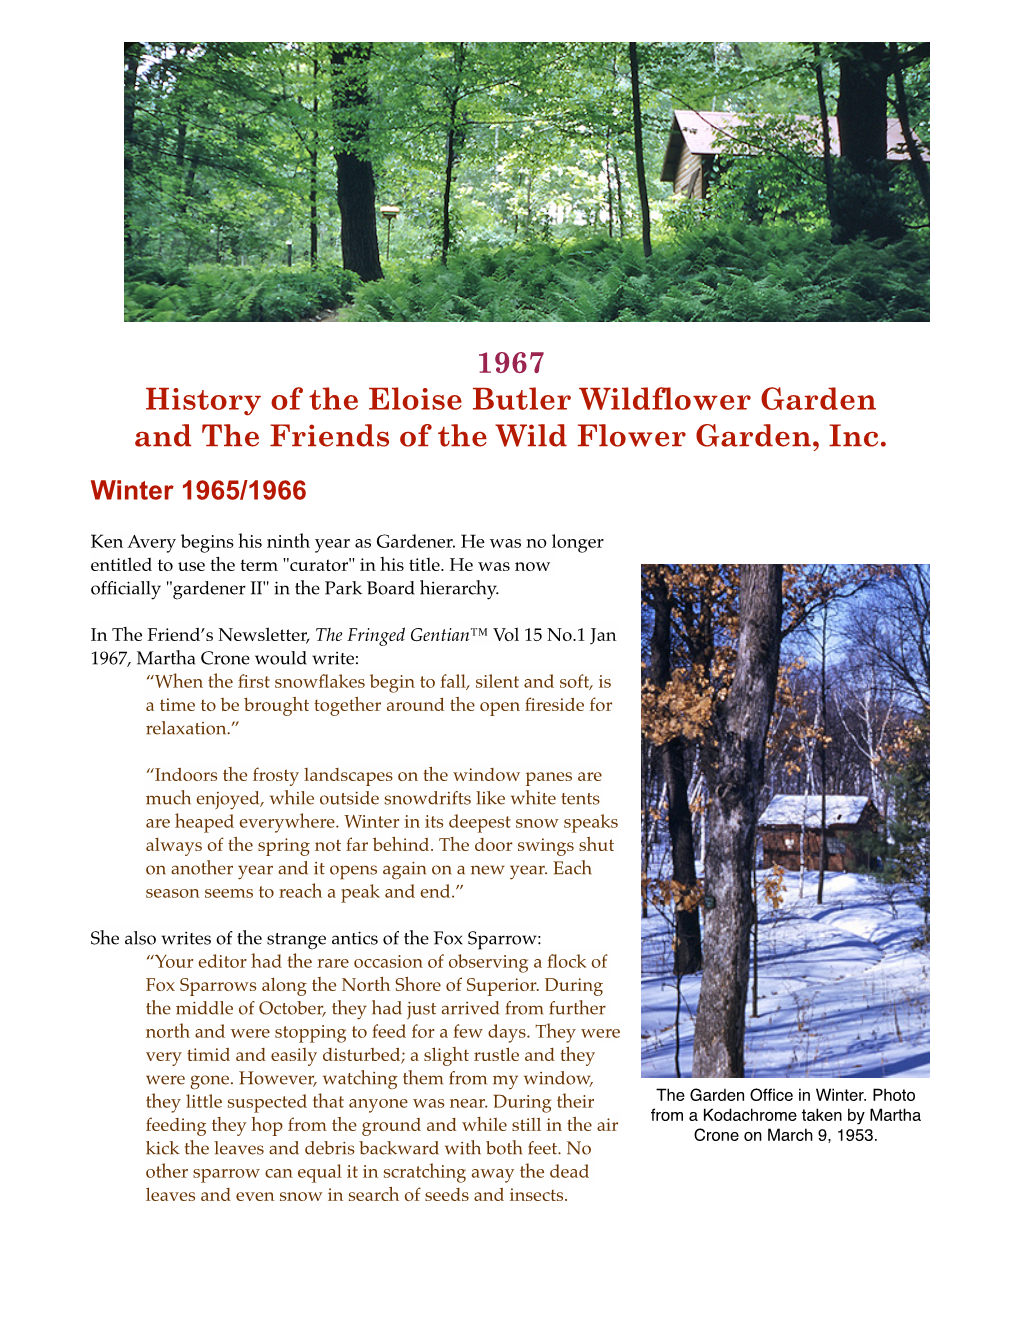 1967 History of the Eloise Butler Wildflower Garden and the Friends of the Wild Flower Garden, Inc. Winter 1965/1966